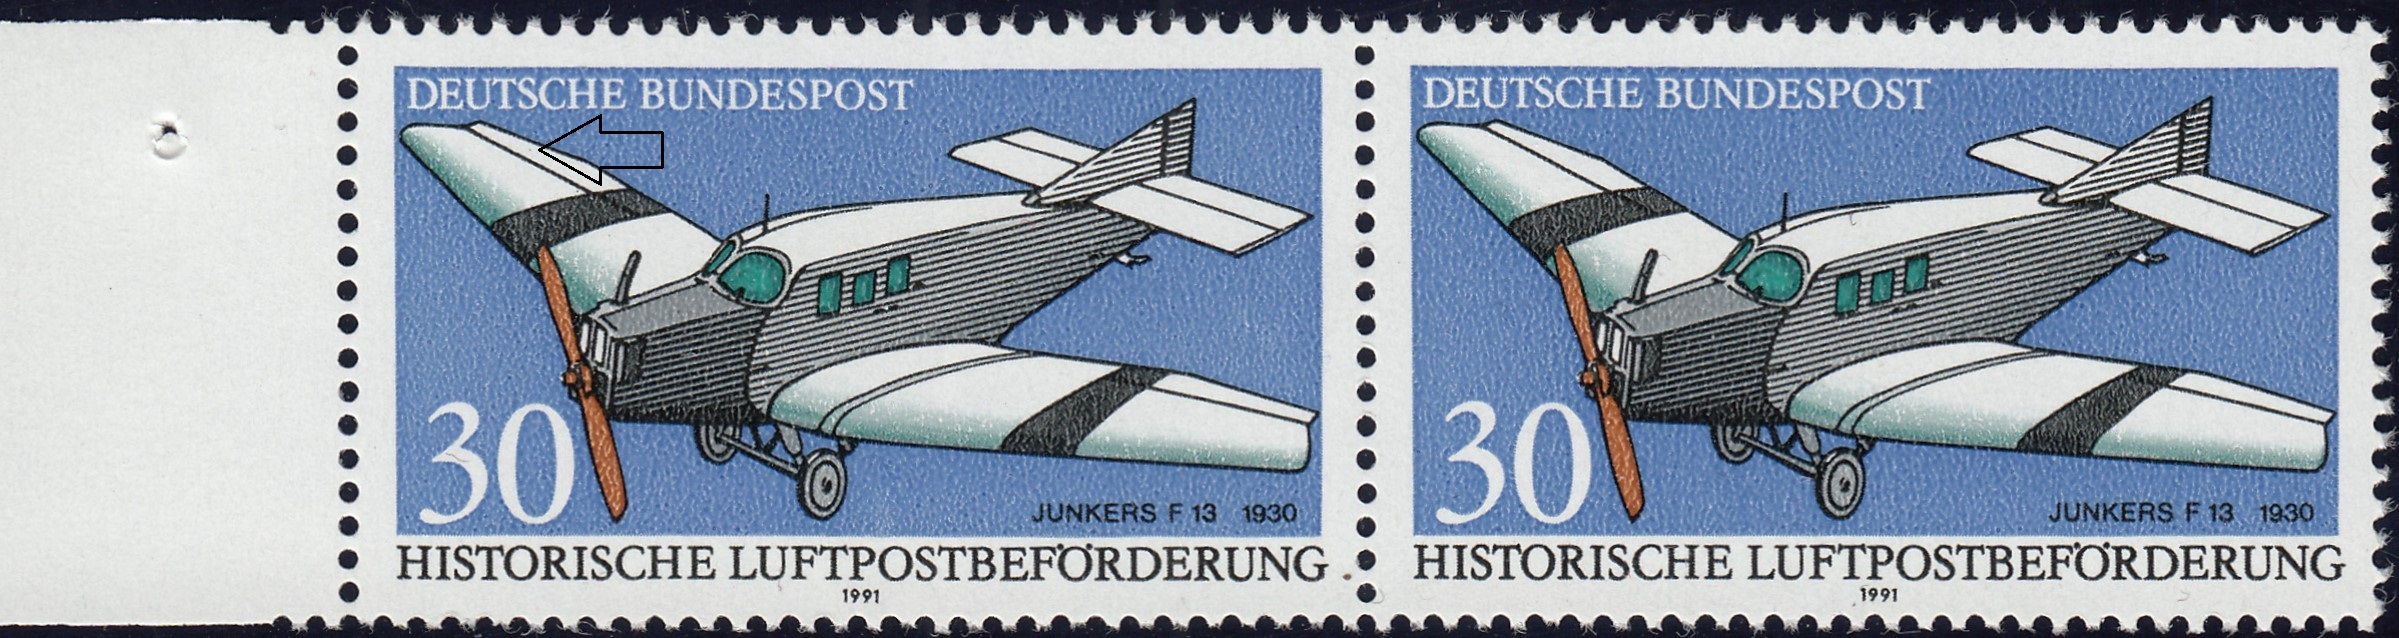 13 posting. Airplane stamp Print.